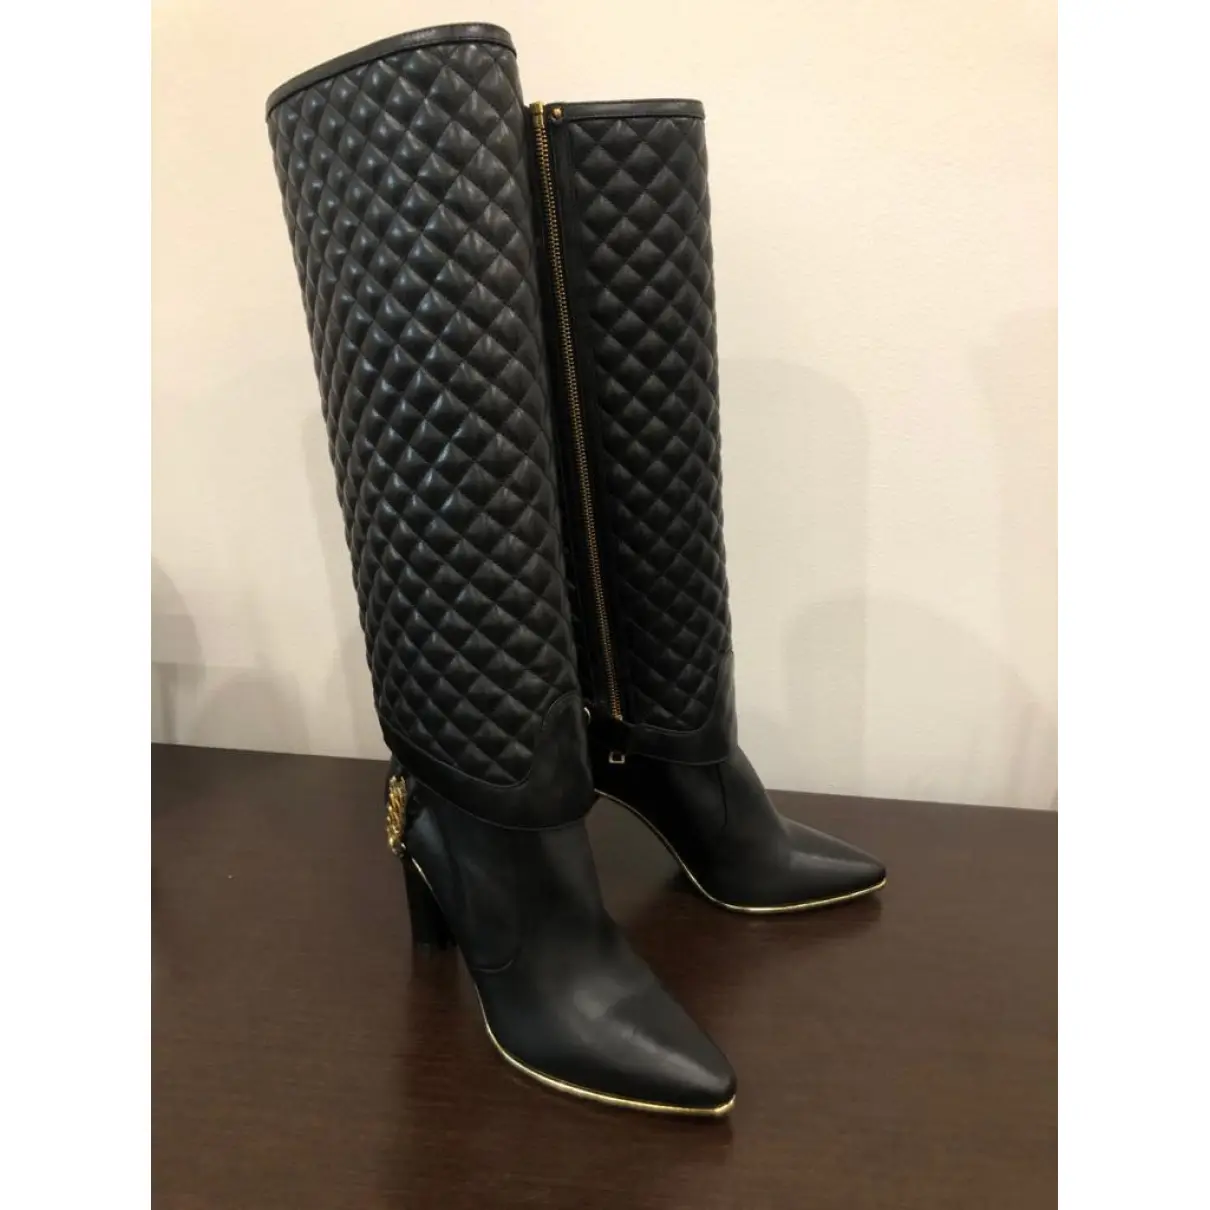 Buy Balmain Leather boots online